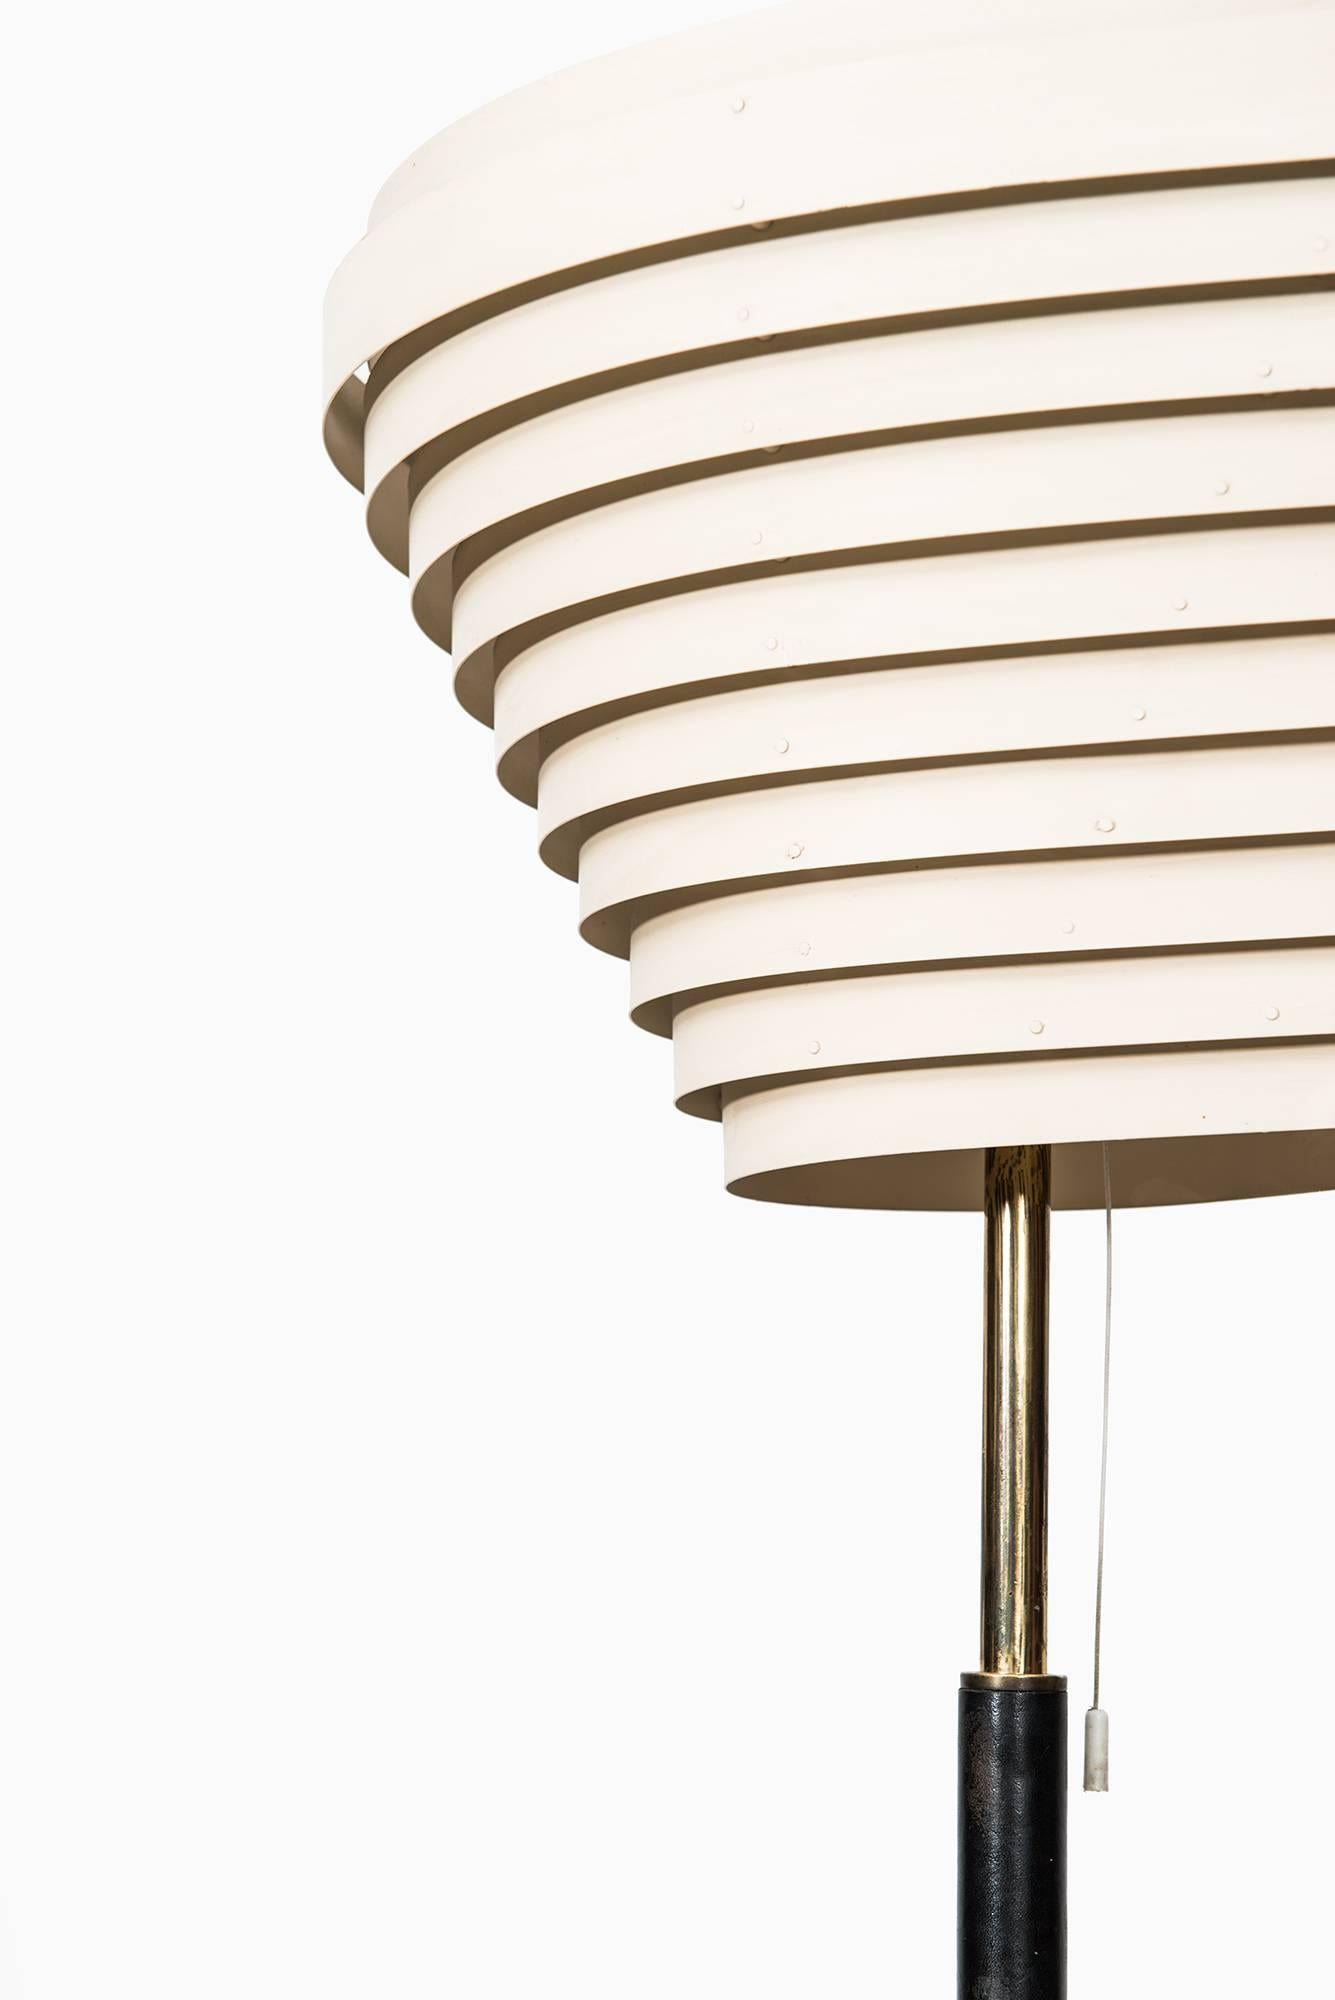 Scandinavian Modern Alvar Aalto Angel Wing Floor Lamp Model A805 by Valaistustyö in Finland For Sale